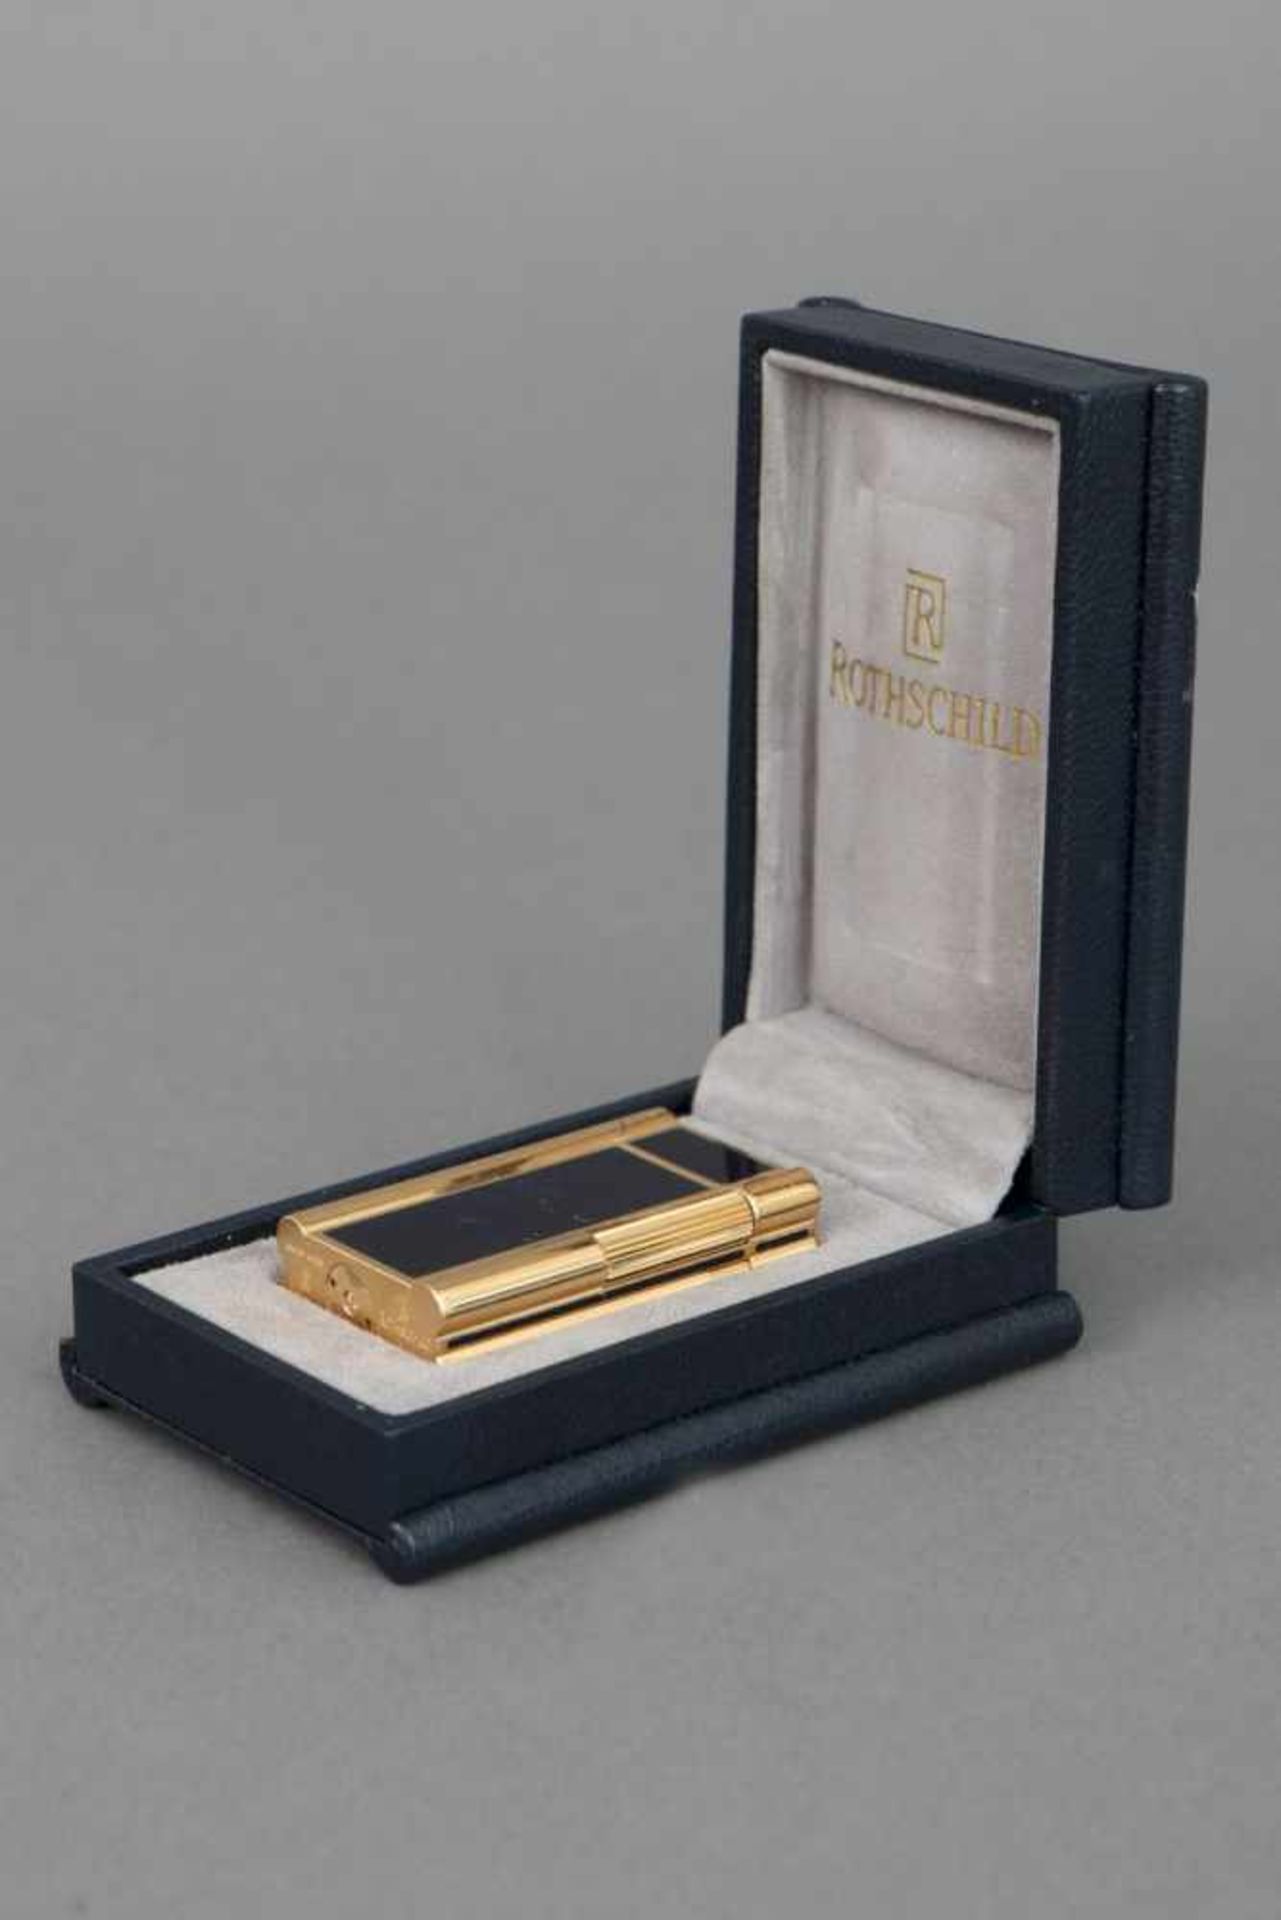 Rothschild Feuerzeugvergoldetes Metall und dunkler Chinalack, im original Etui (beledert), - Image 3 of 3